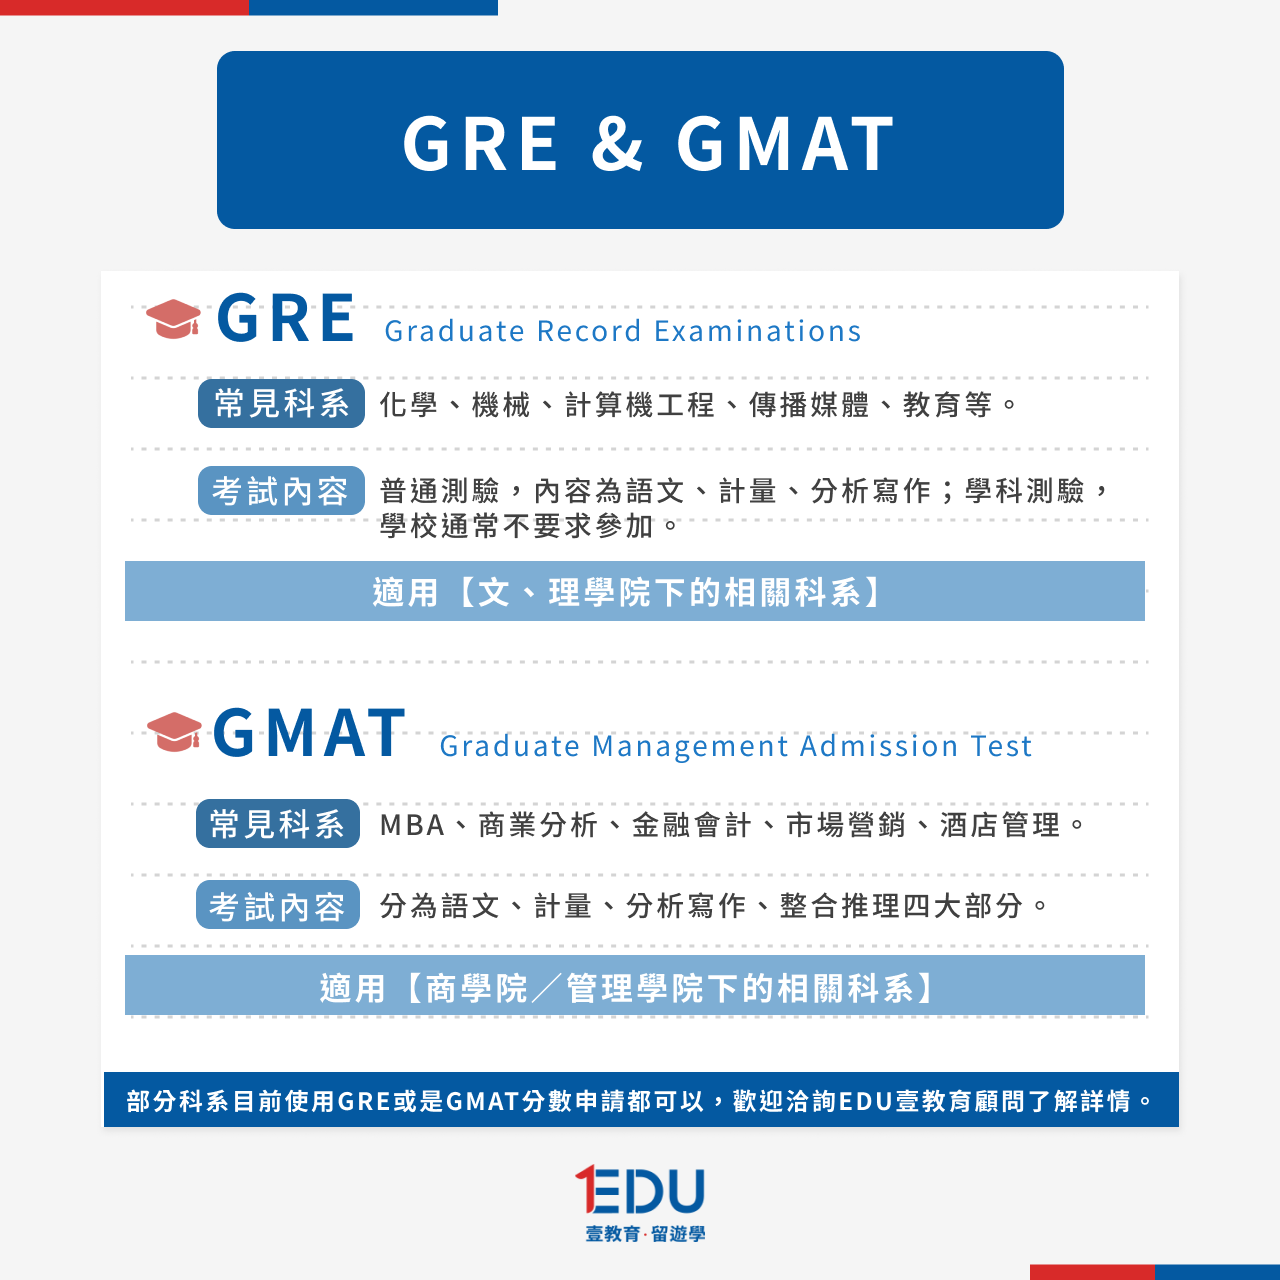 GRE & GMAT